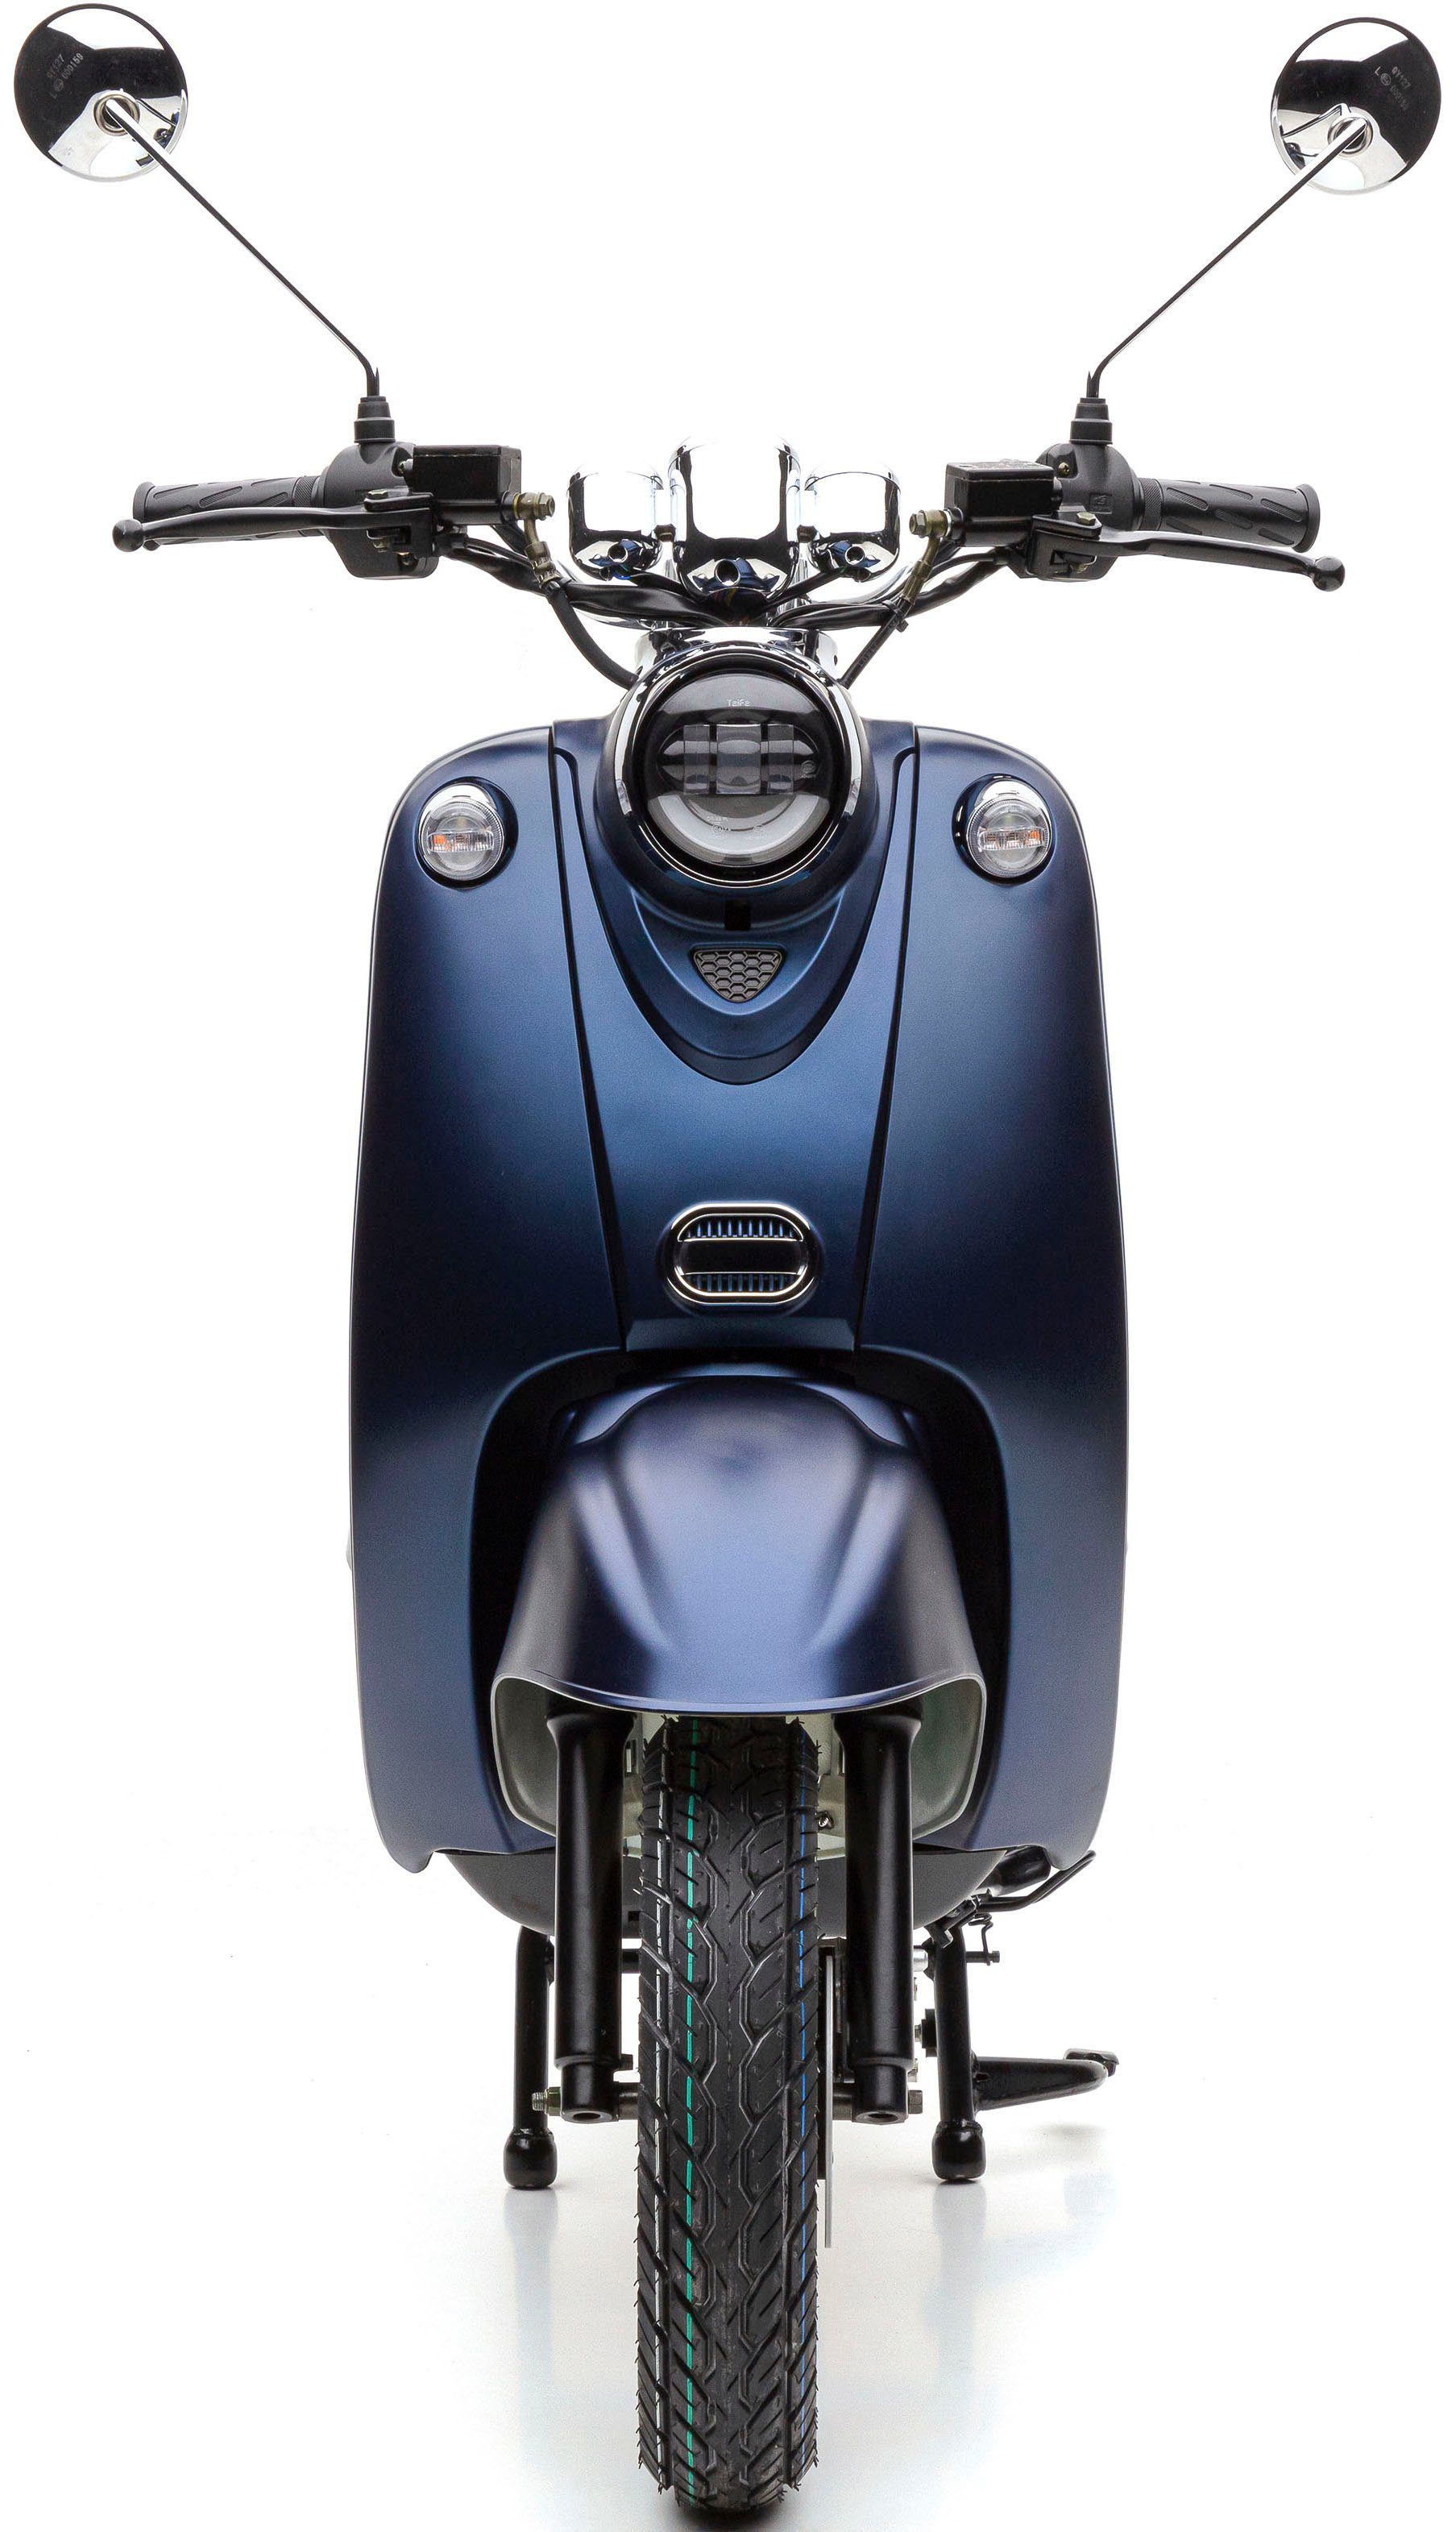 Sitzbank W, Li km/h, 45 Weißwandreifen, Star Tacho Mit digitalem 2000 blau E-Motorroller Motors Premium, Nova und eRetro gesteppter